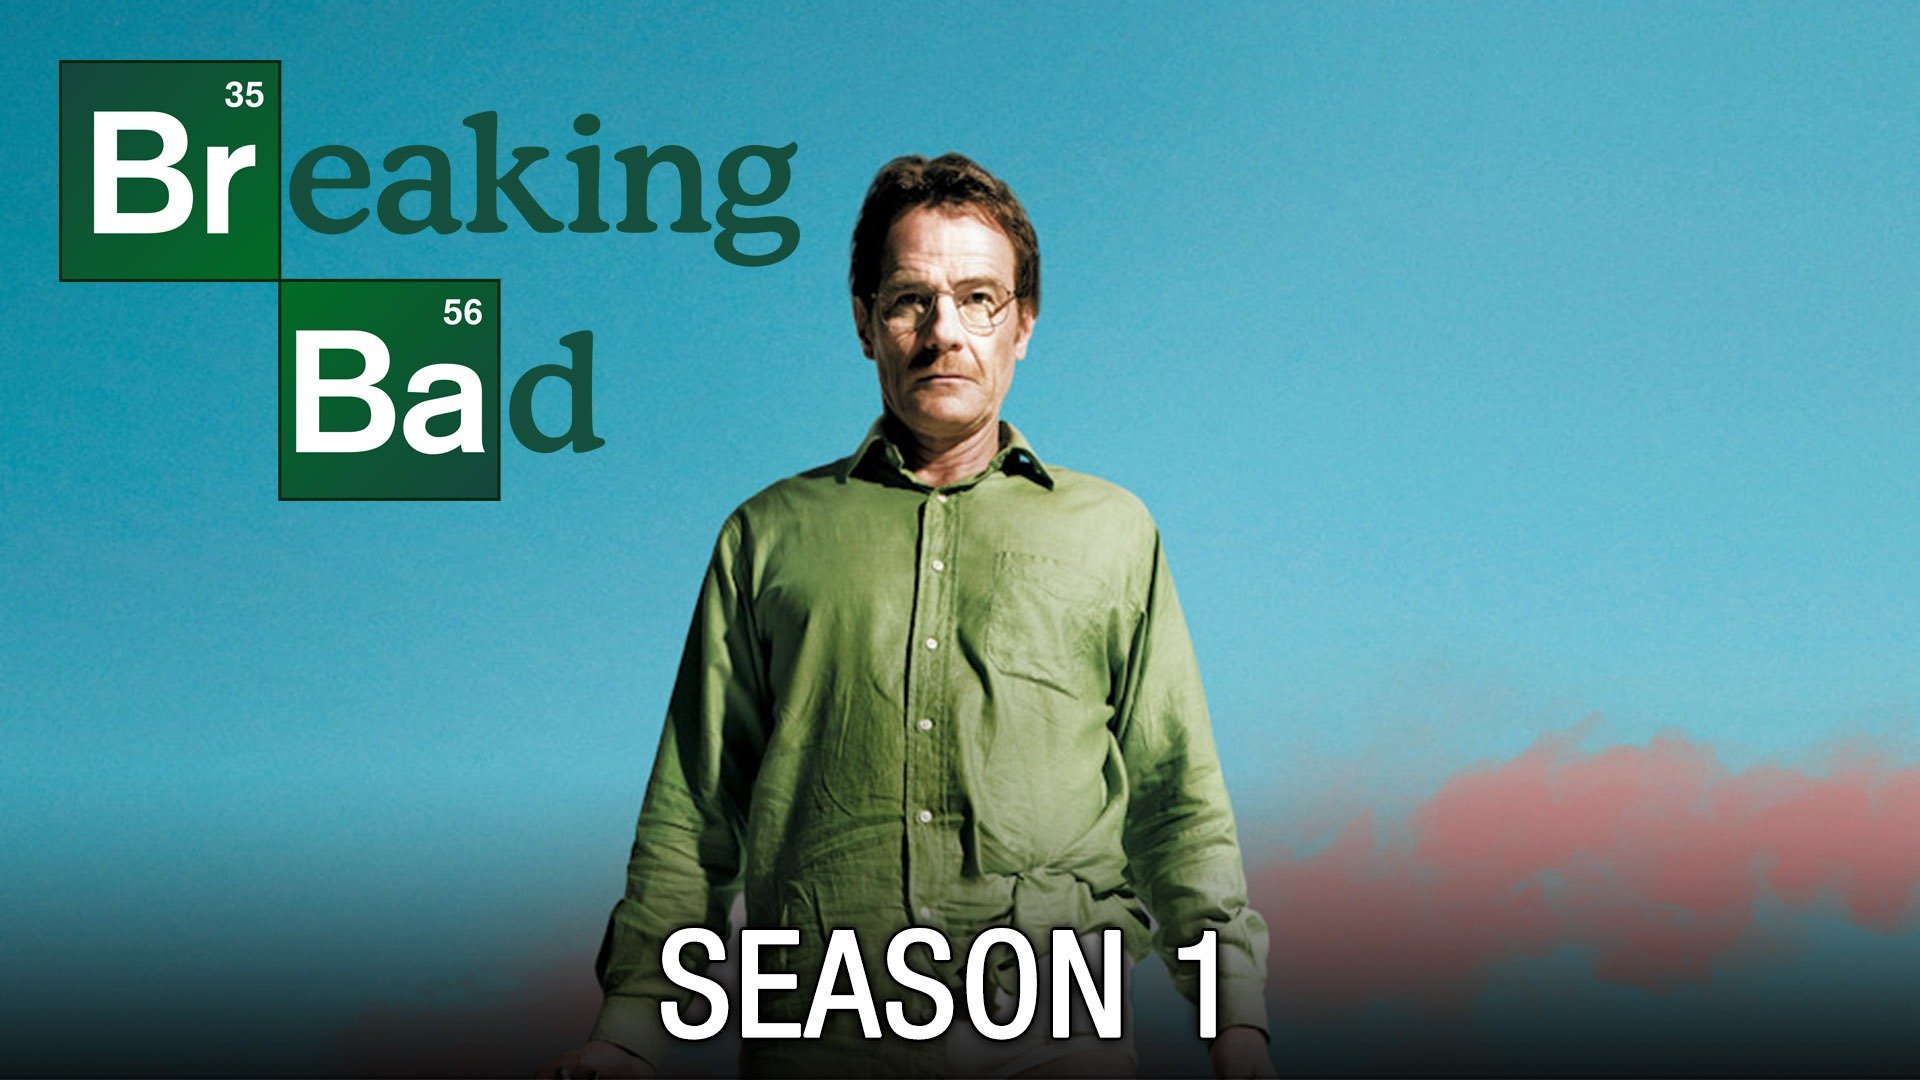 Breaking bad season 1 5